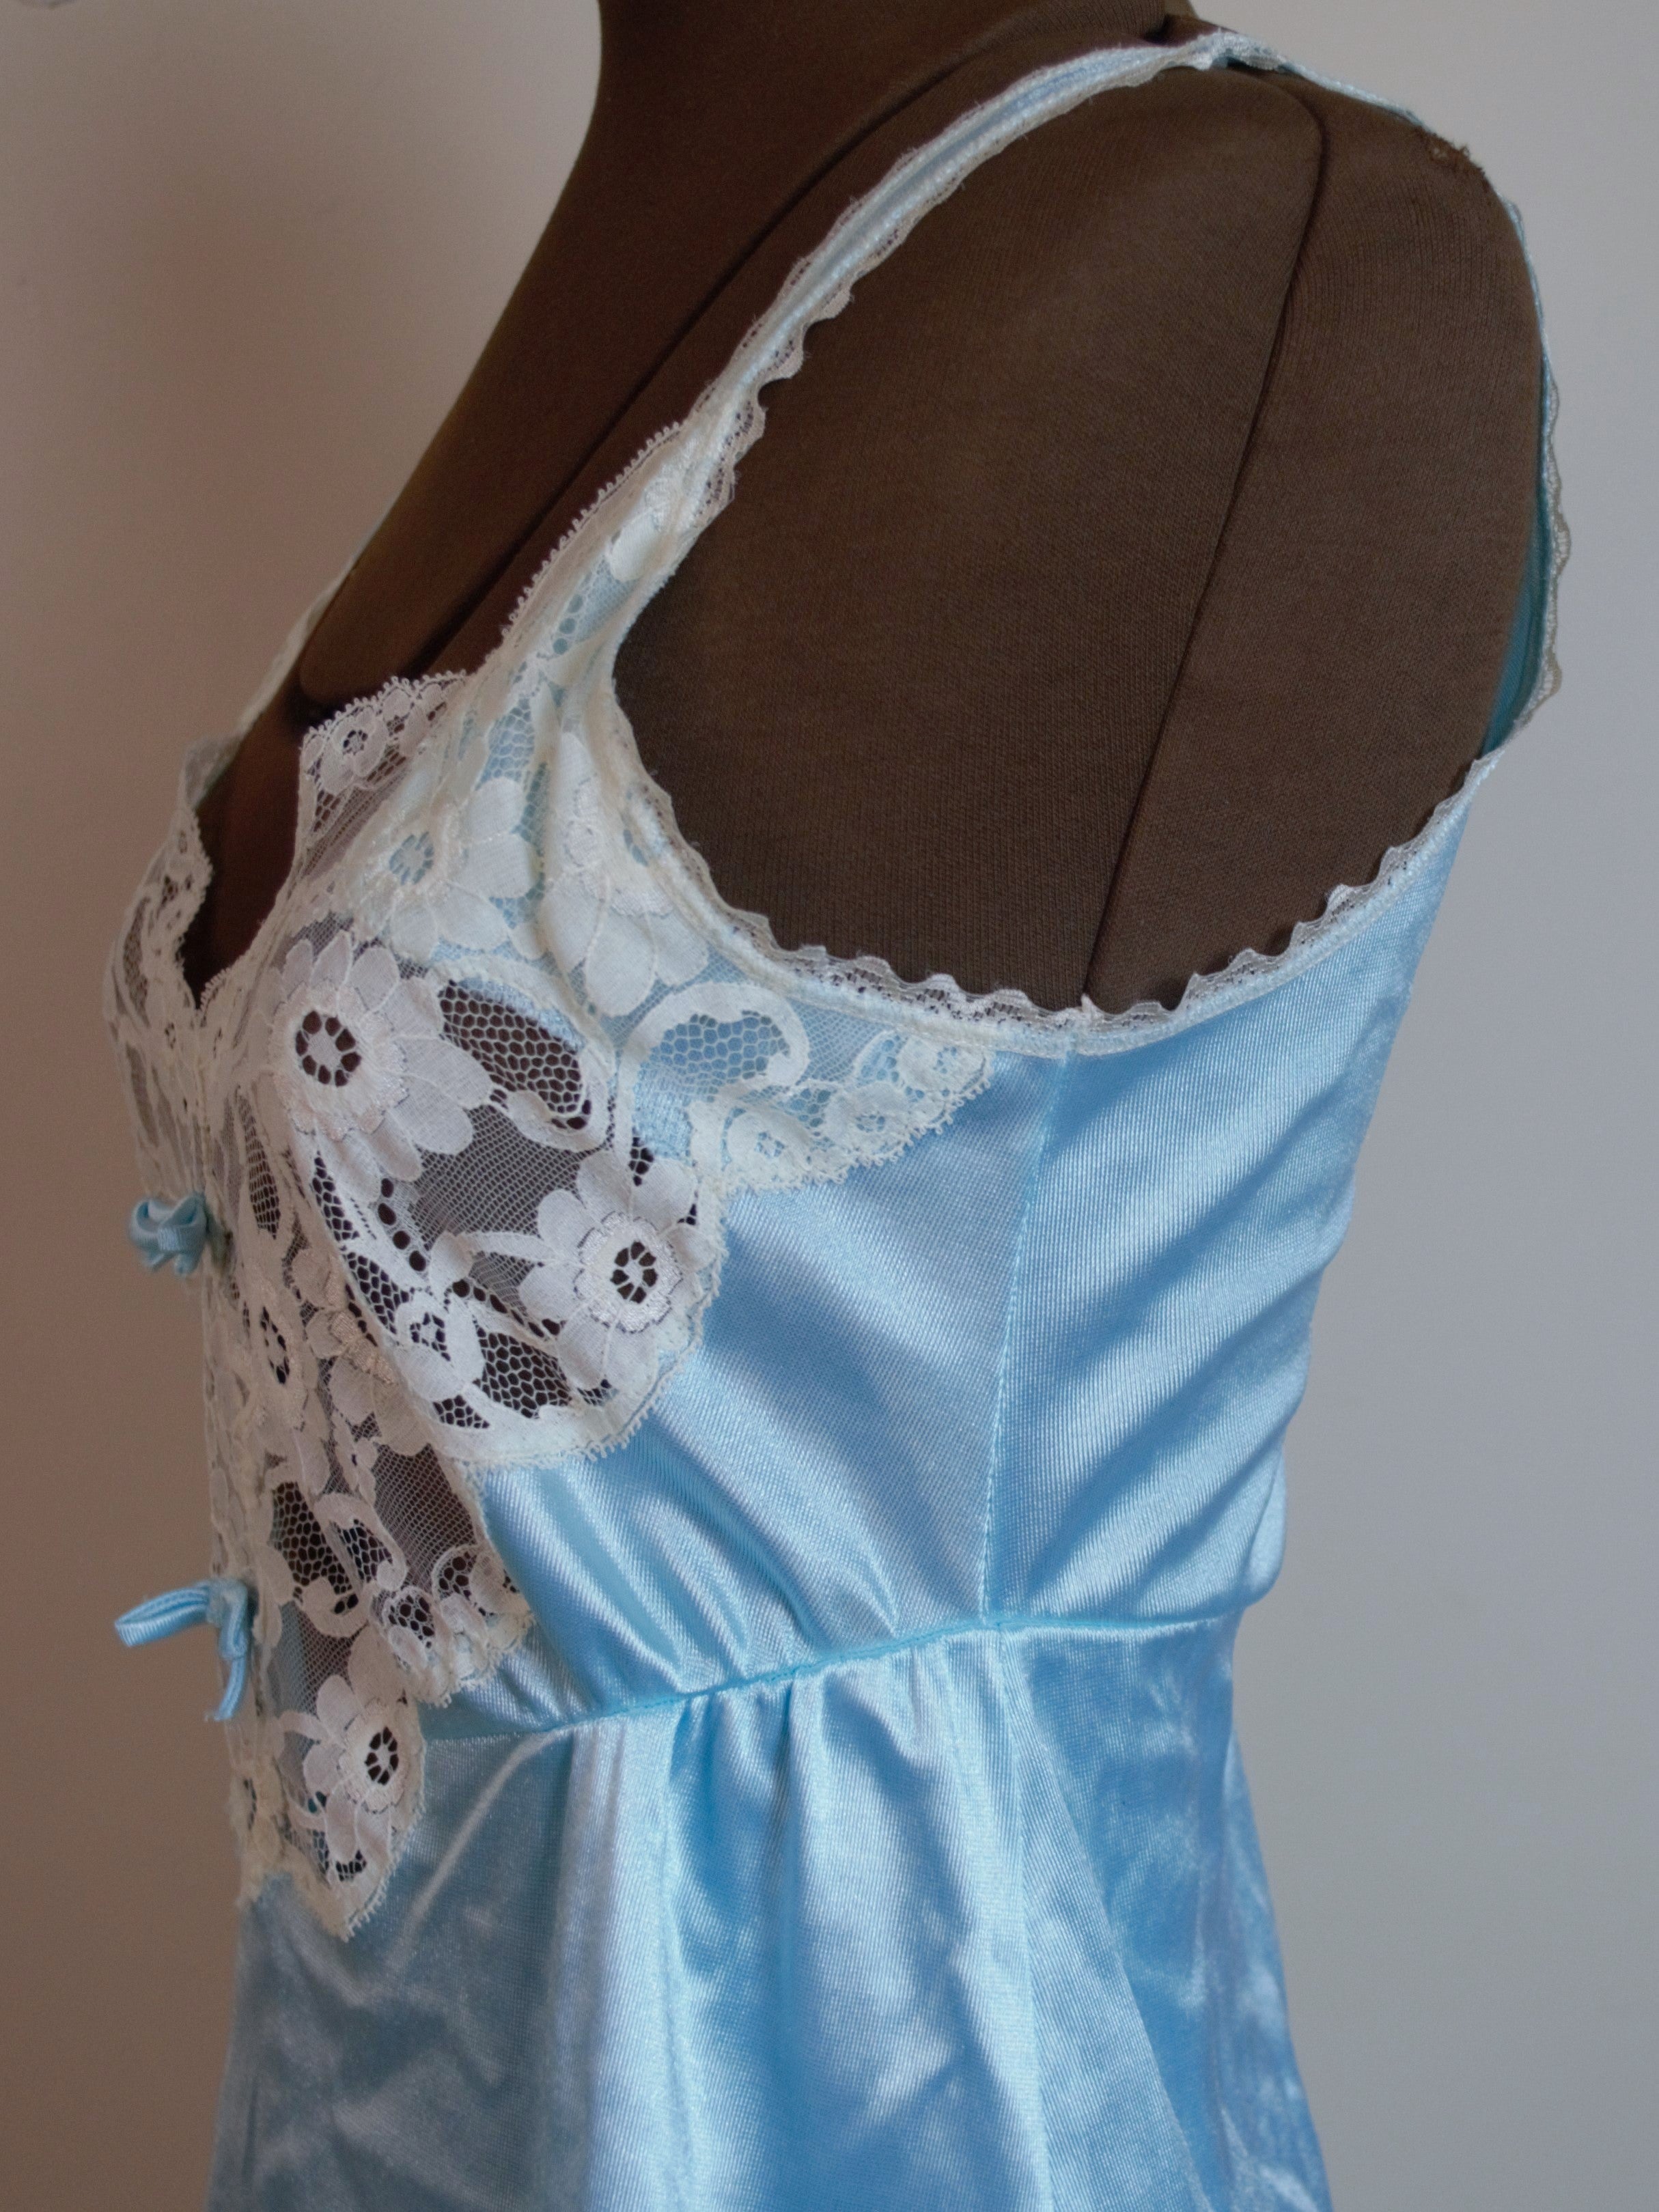 Vintage 70s Baby Blue Mini Slip Dress